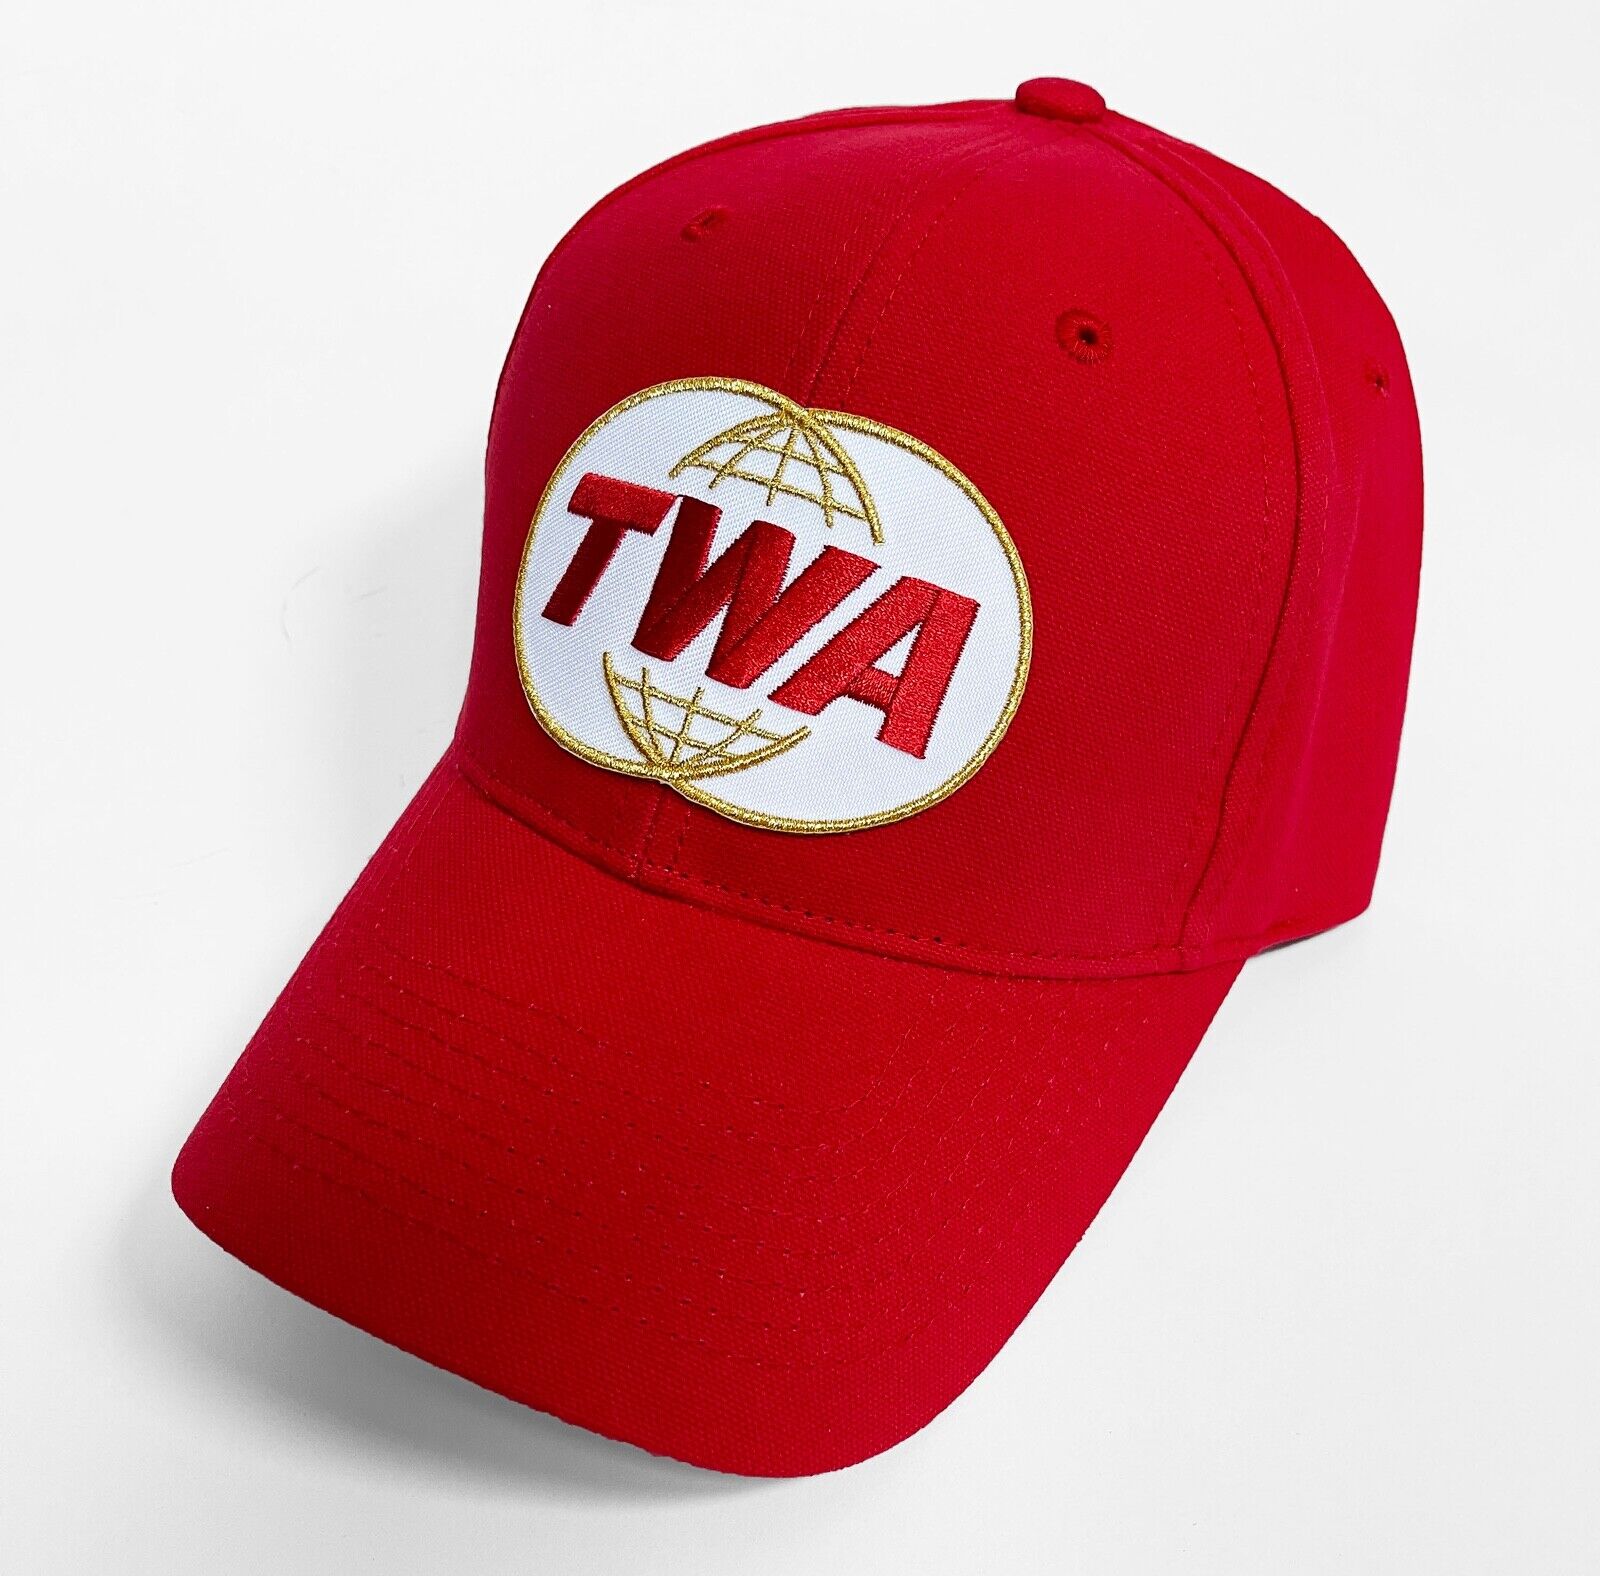 Classic Look TWA Trans World Airlines Crew Cap - Brand New, Unworn, Collectible